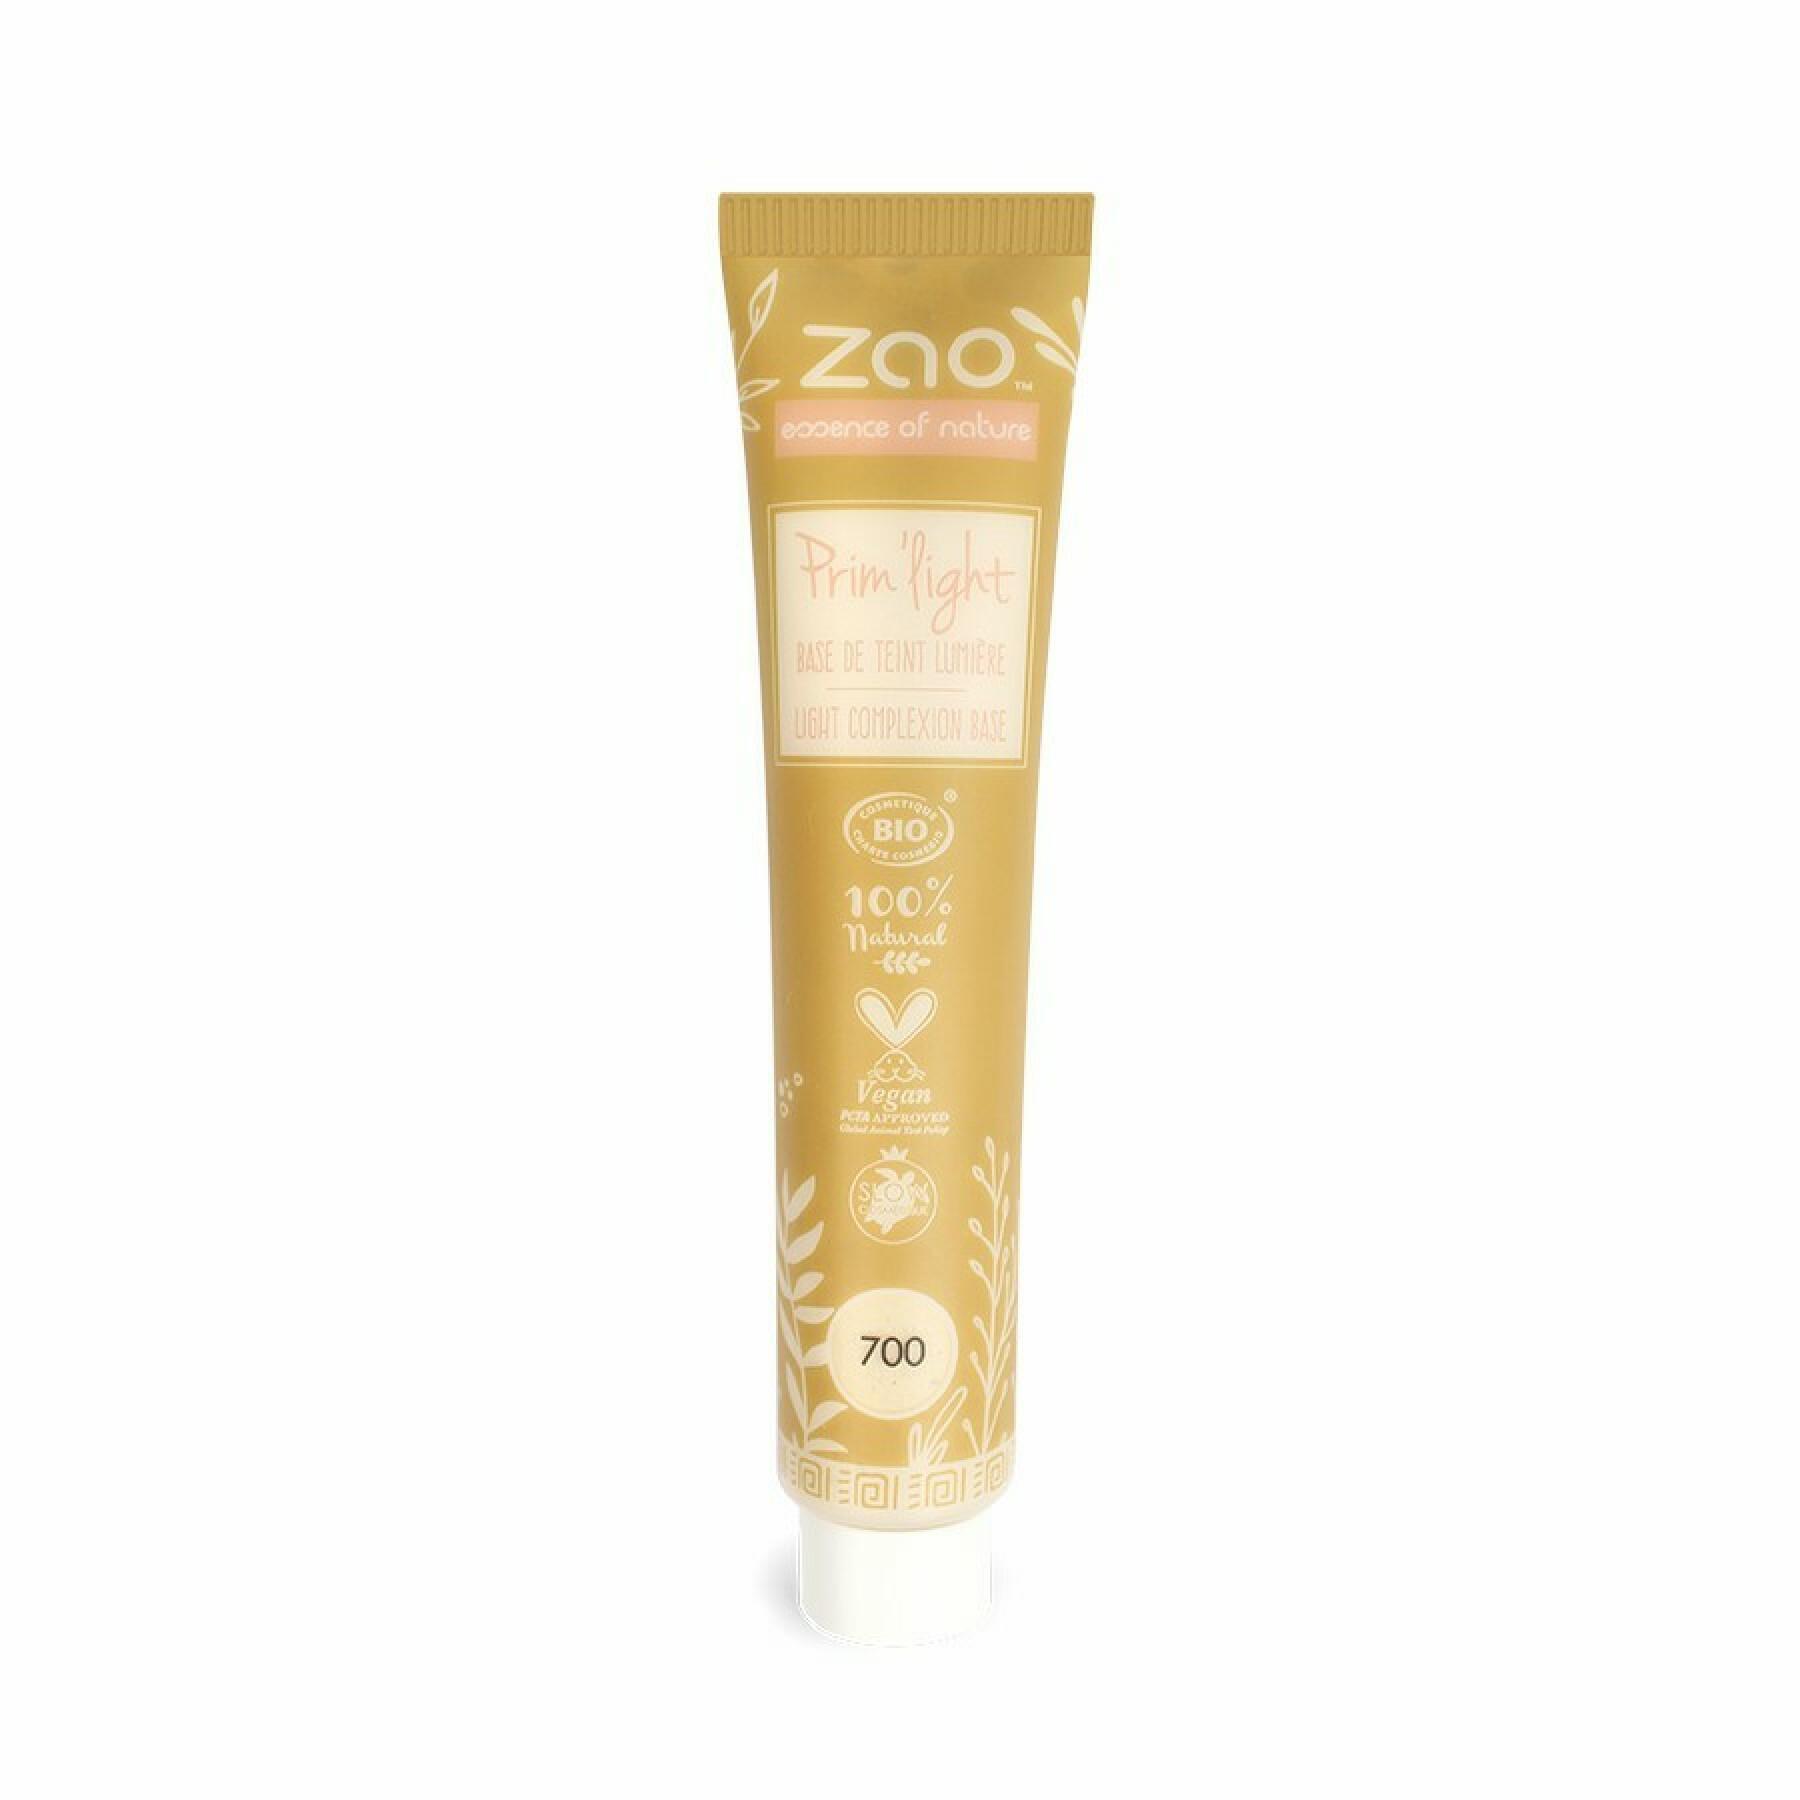 Pearly foundation refill 700 beige woman Zao Prim light - 30 ml